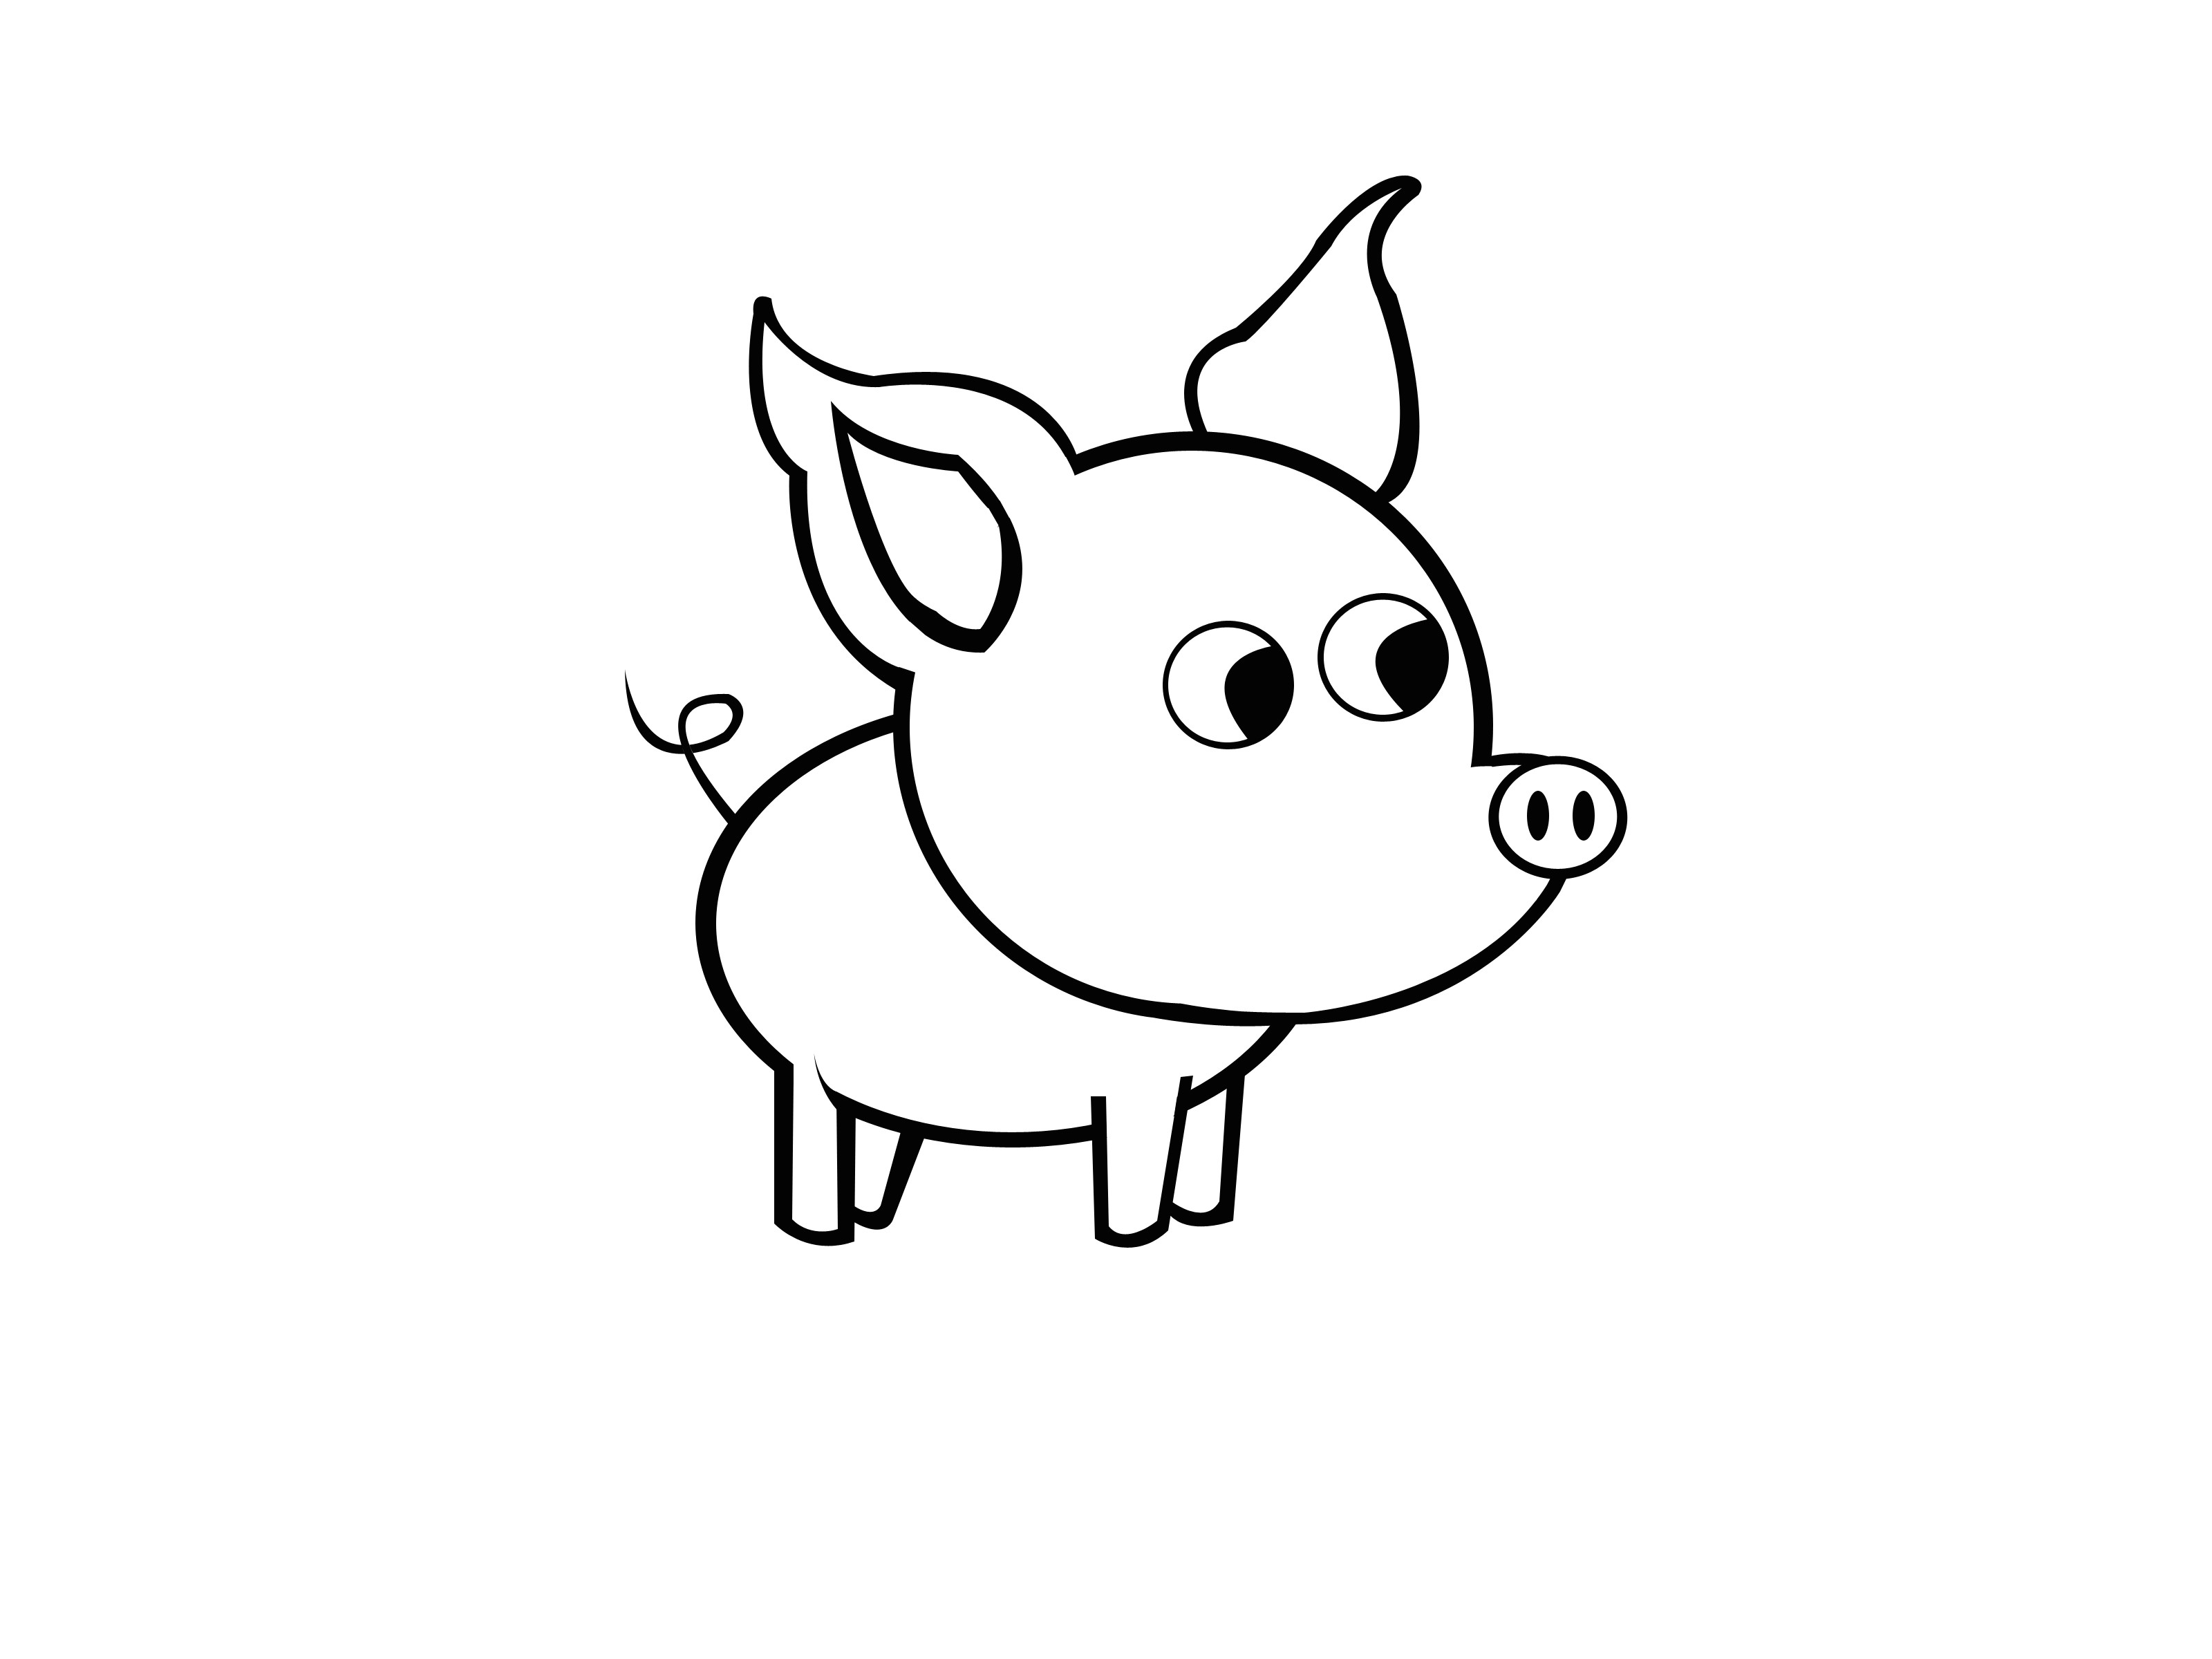 draw a simple pig step 9 jpg